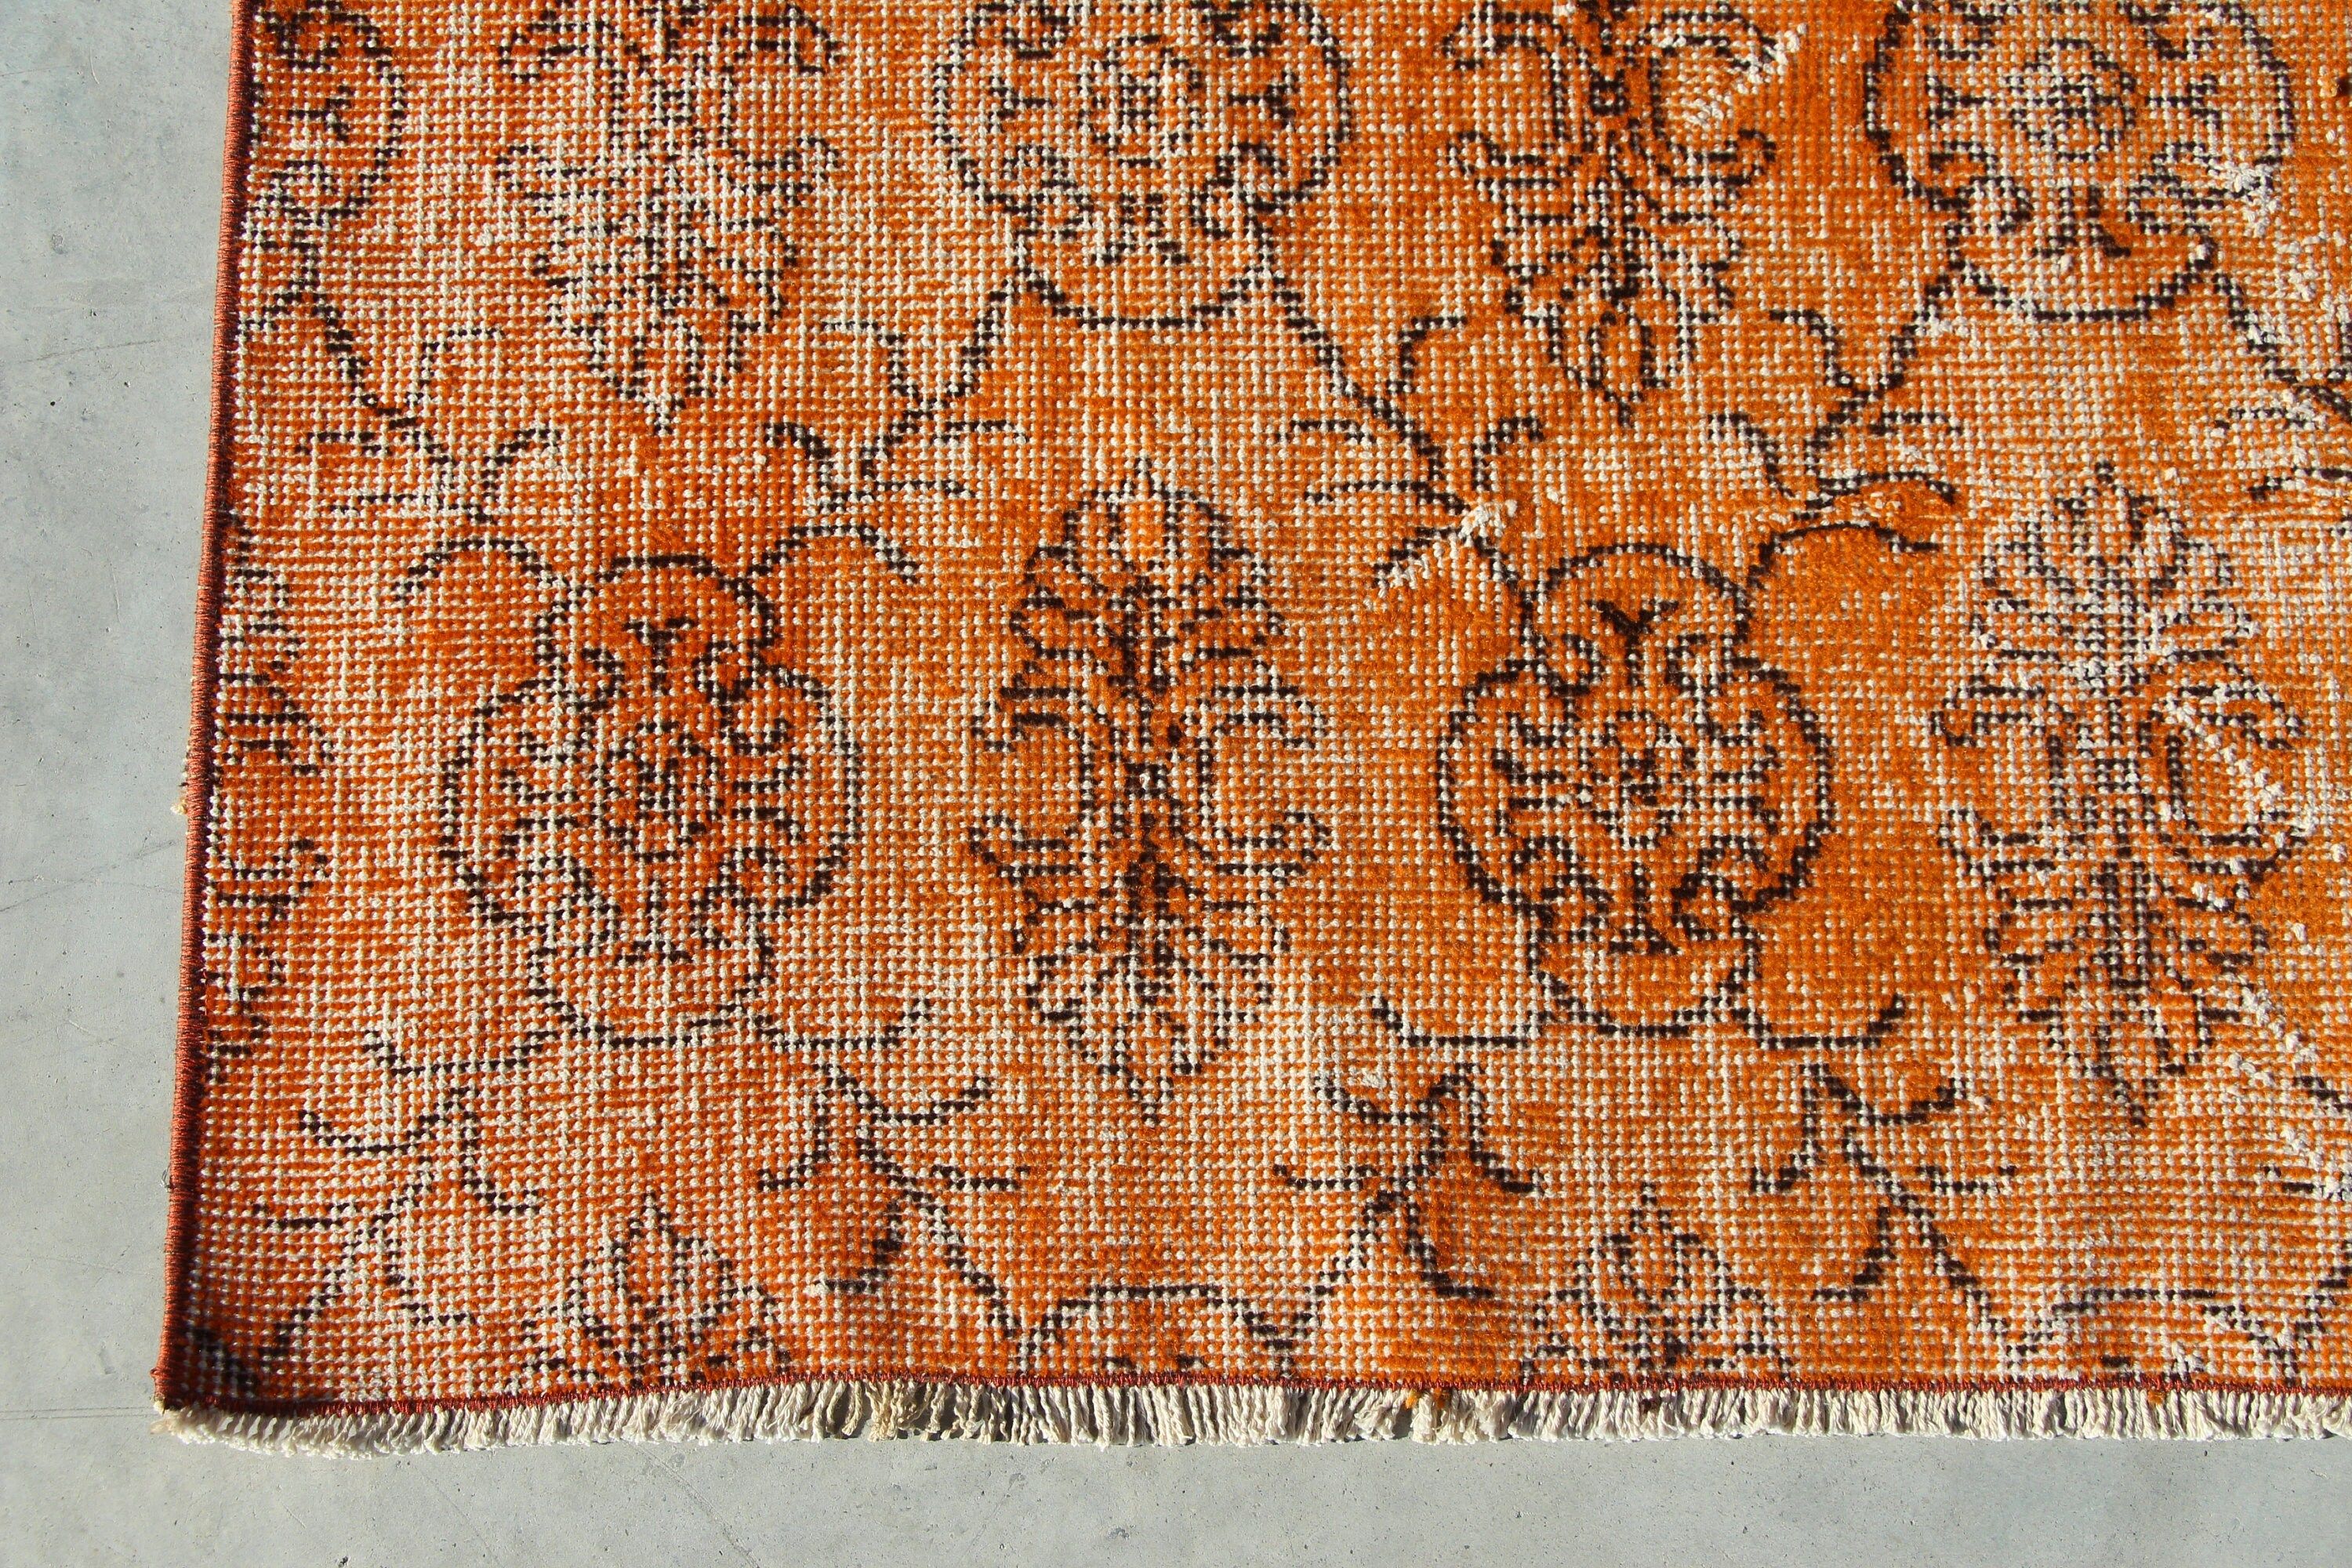 Orange Anatolian Rug, Vintage Rug, Hand Woven Rug, Turkish Rug, 3.7x6.3 ft Accent Rugs, Cool Rug, Bedroom Rug, Home Decor Rugs, Kitchen Rug